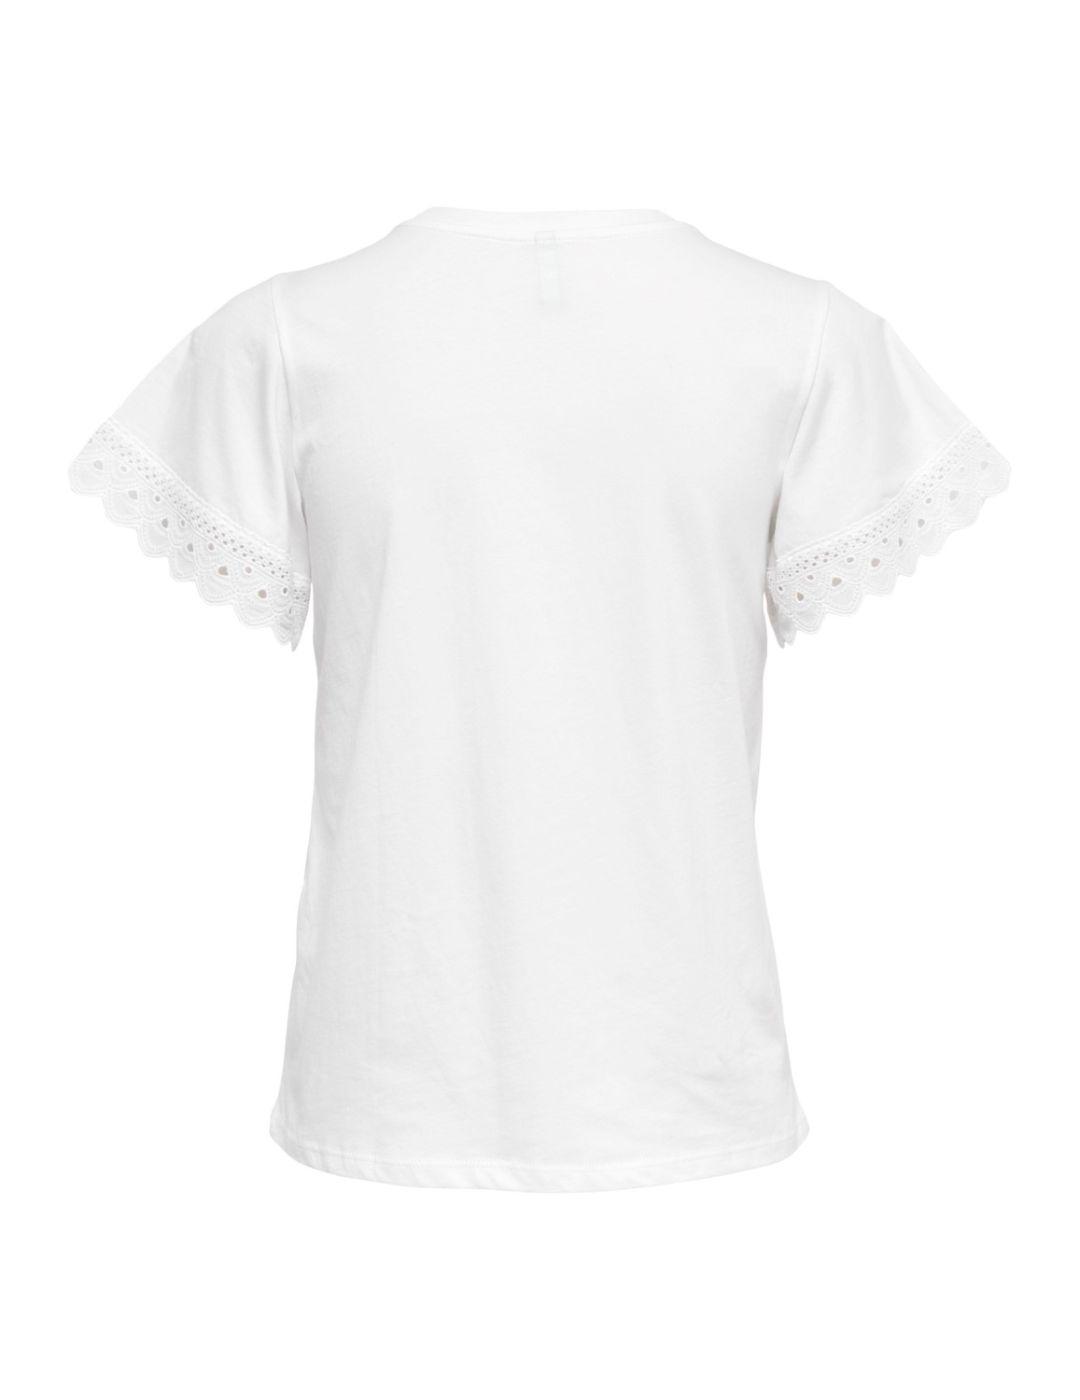 Camiseta Only Tea blanca bordado manga de mujer -b